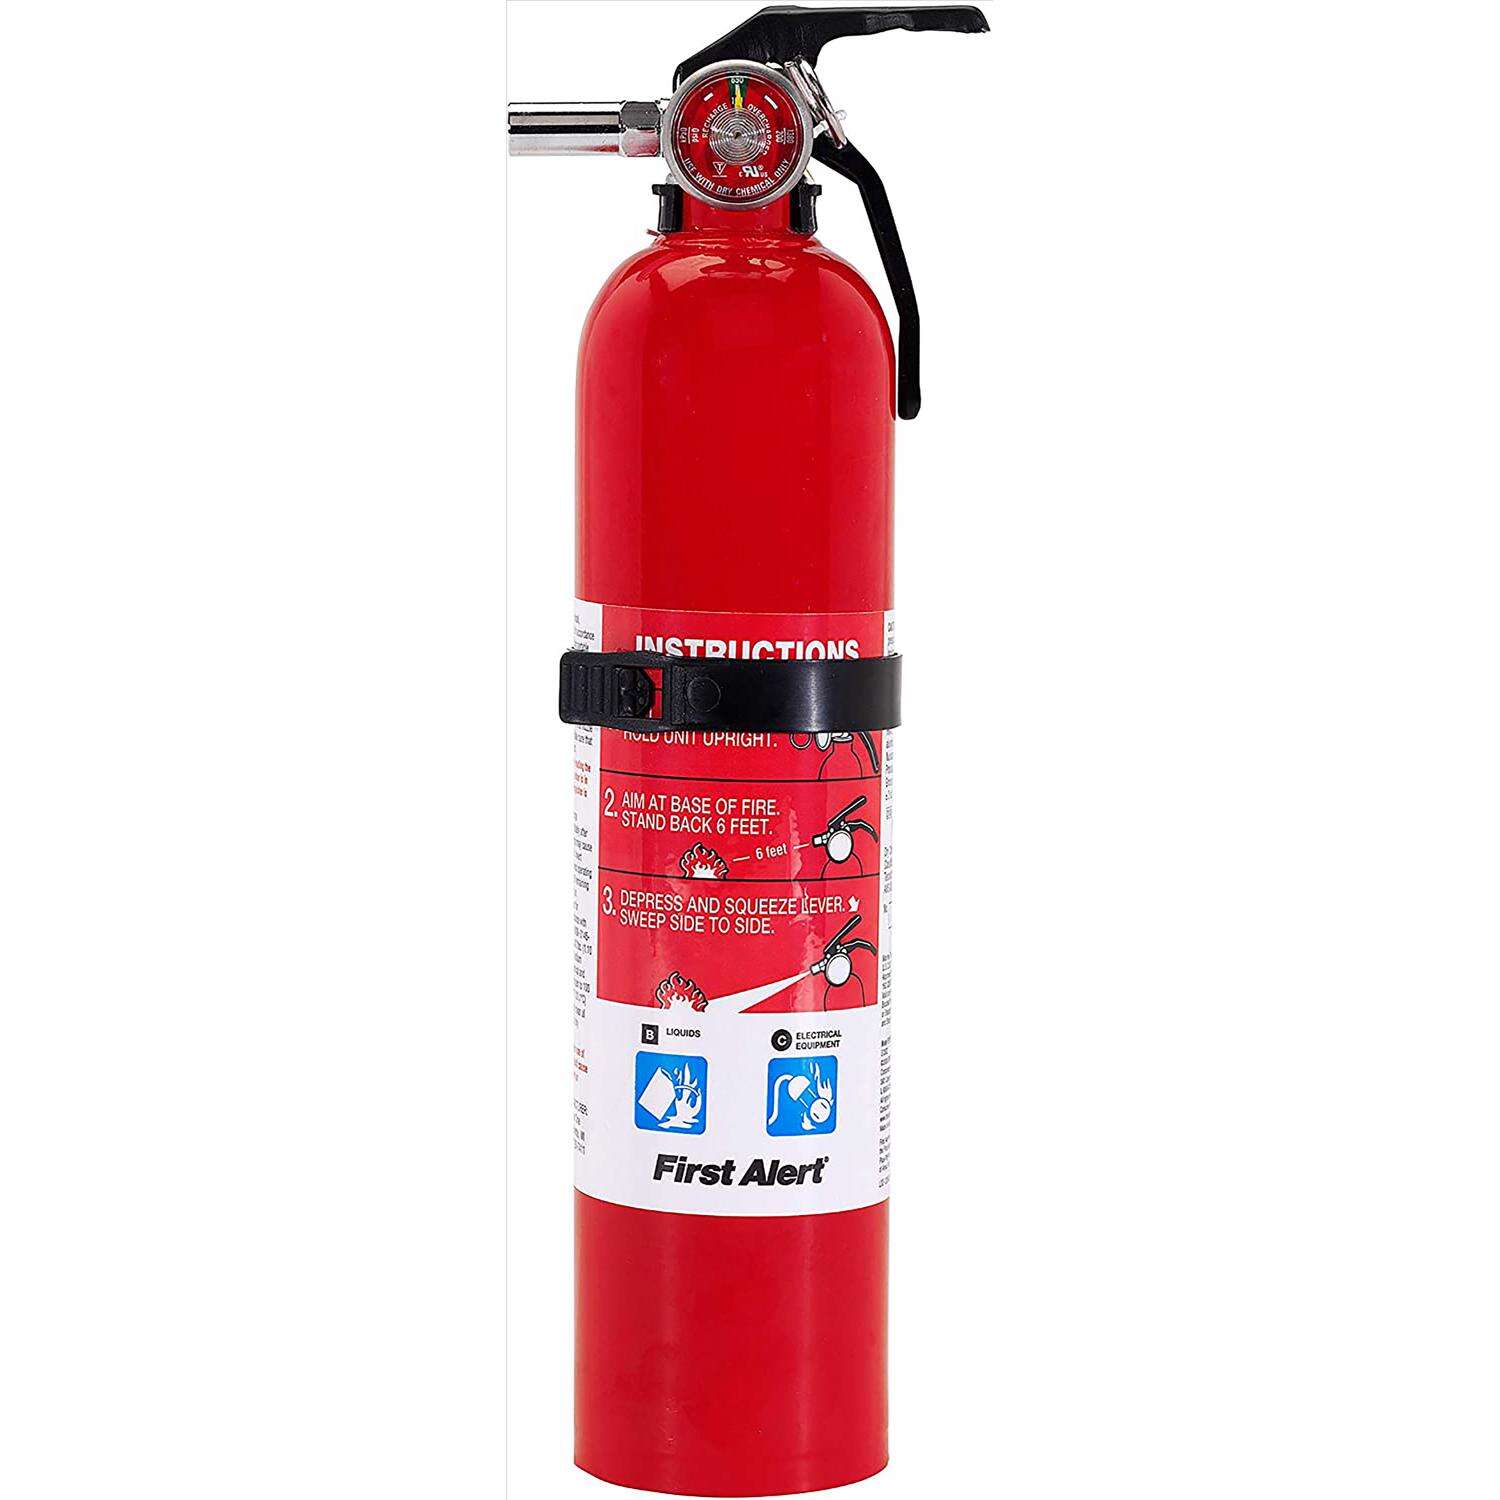 First Alert 2.75-Lb Fire Extinguisher For Garage or Shop (GARAGE10) $18 at Ace Hardware w/ Free Store Pickup